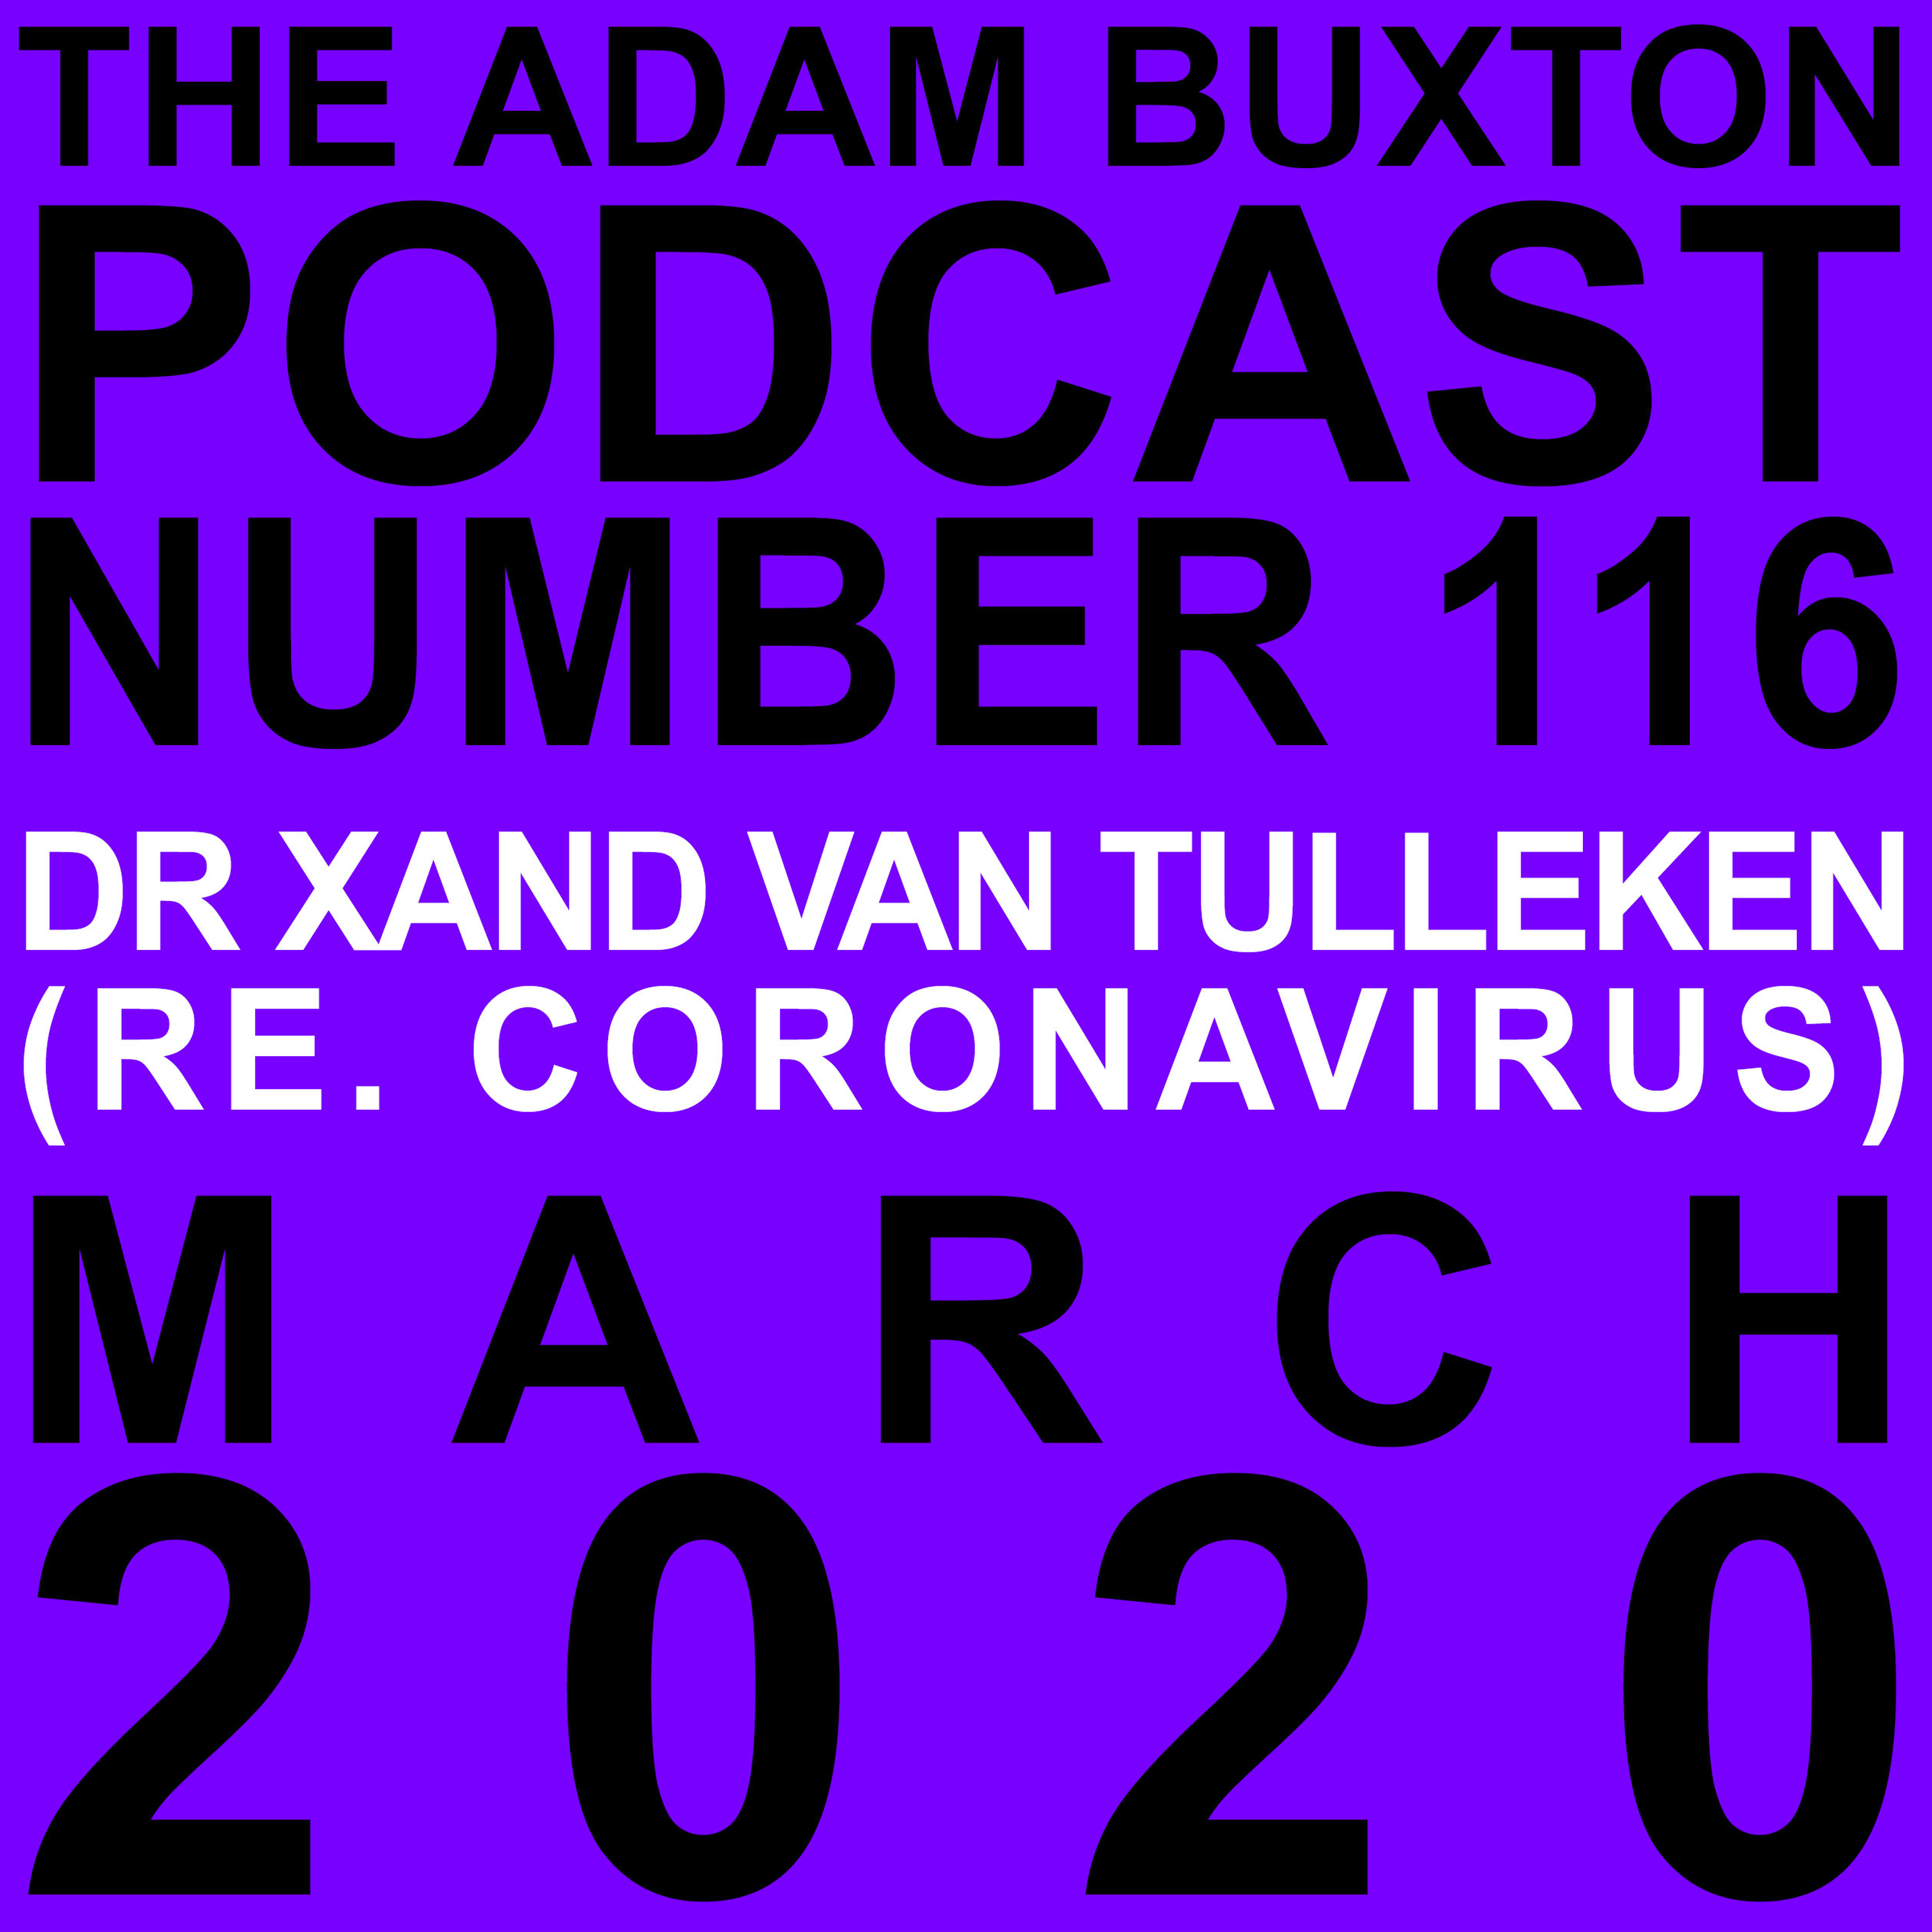 EP.116 - DR XAND VAN TULLEKEN (RE. CORONAVIRUS)